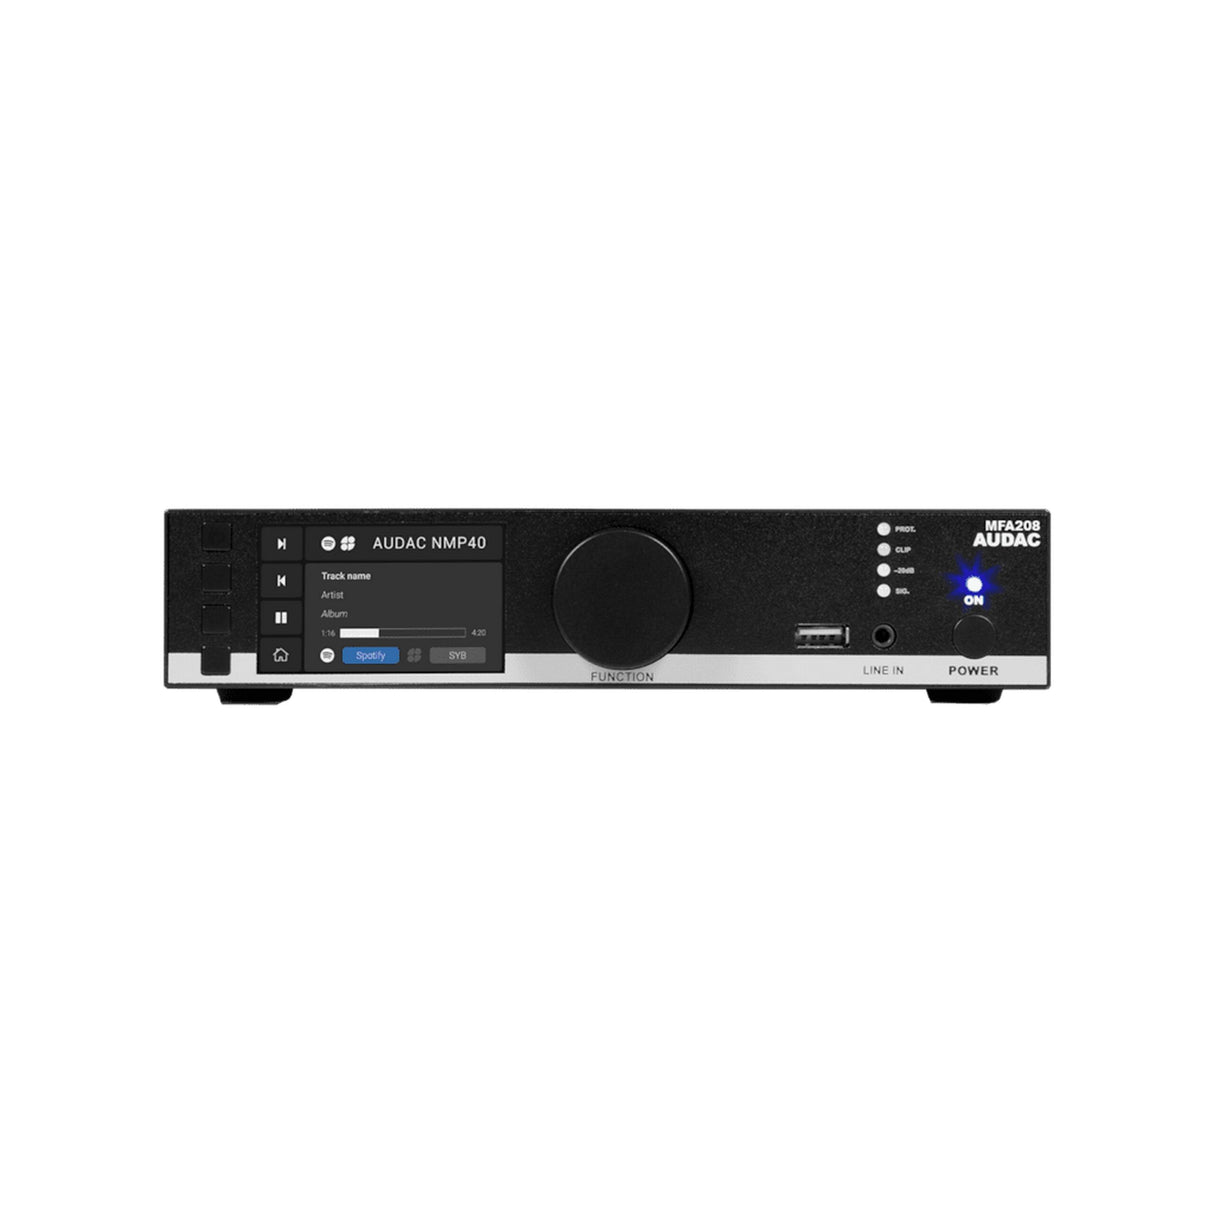 Audac MFA208 2 x 40W All-In-One Audio Solution